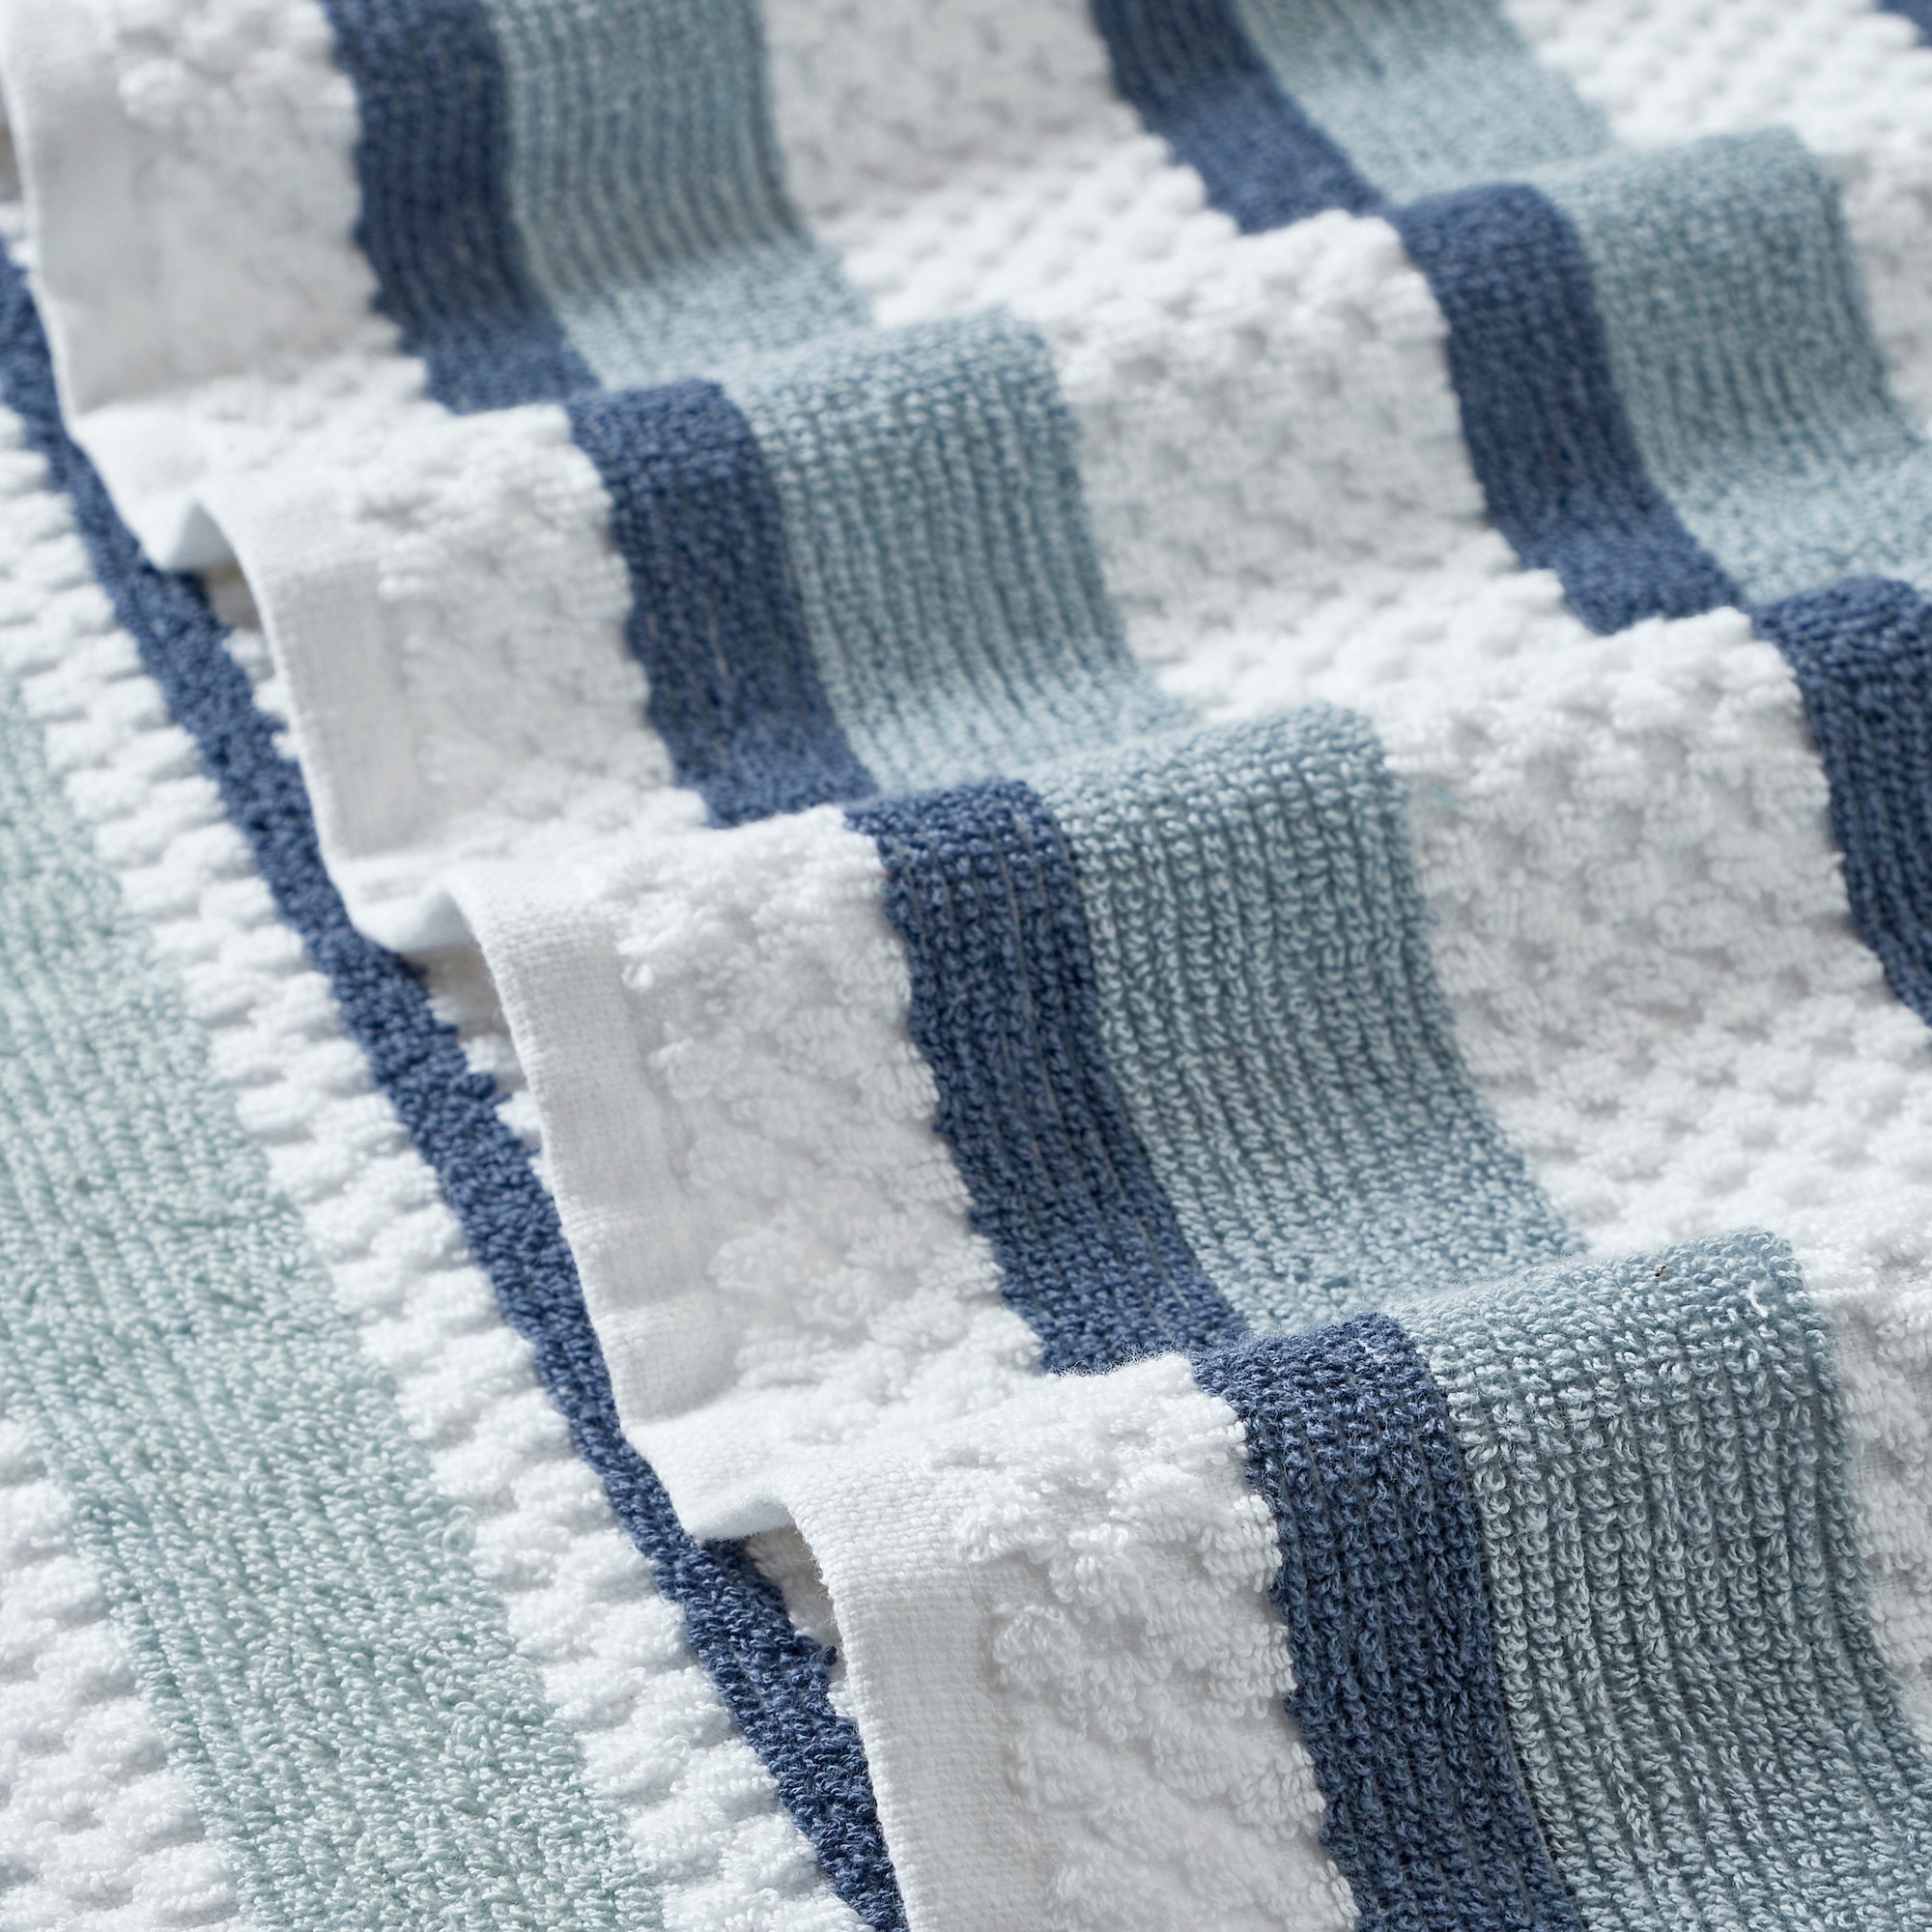 Nyx 6pc Soft Cotton Towel Set, Striped, White, Blue By The Urban Port- Saltoro Sherpi